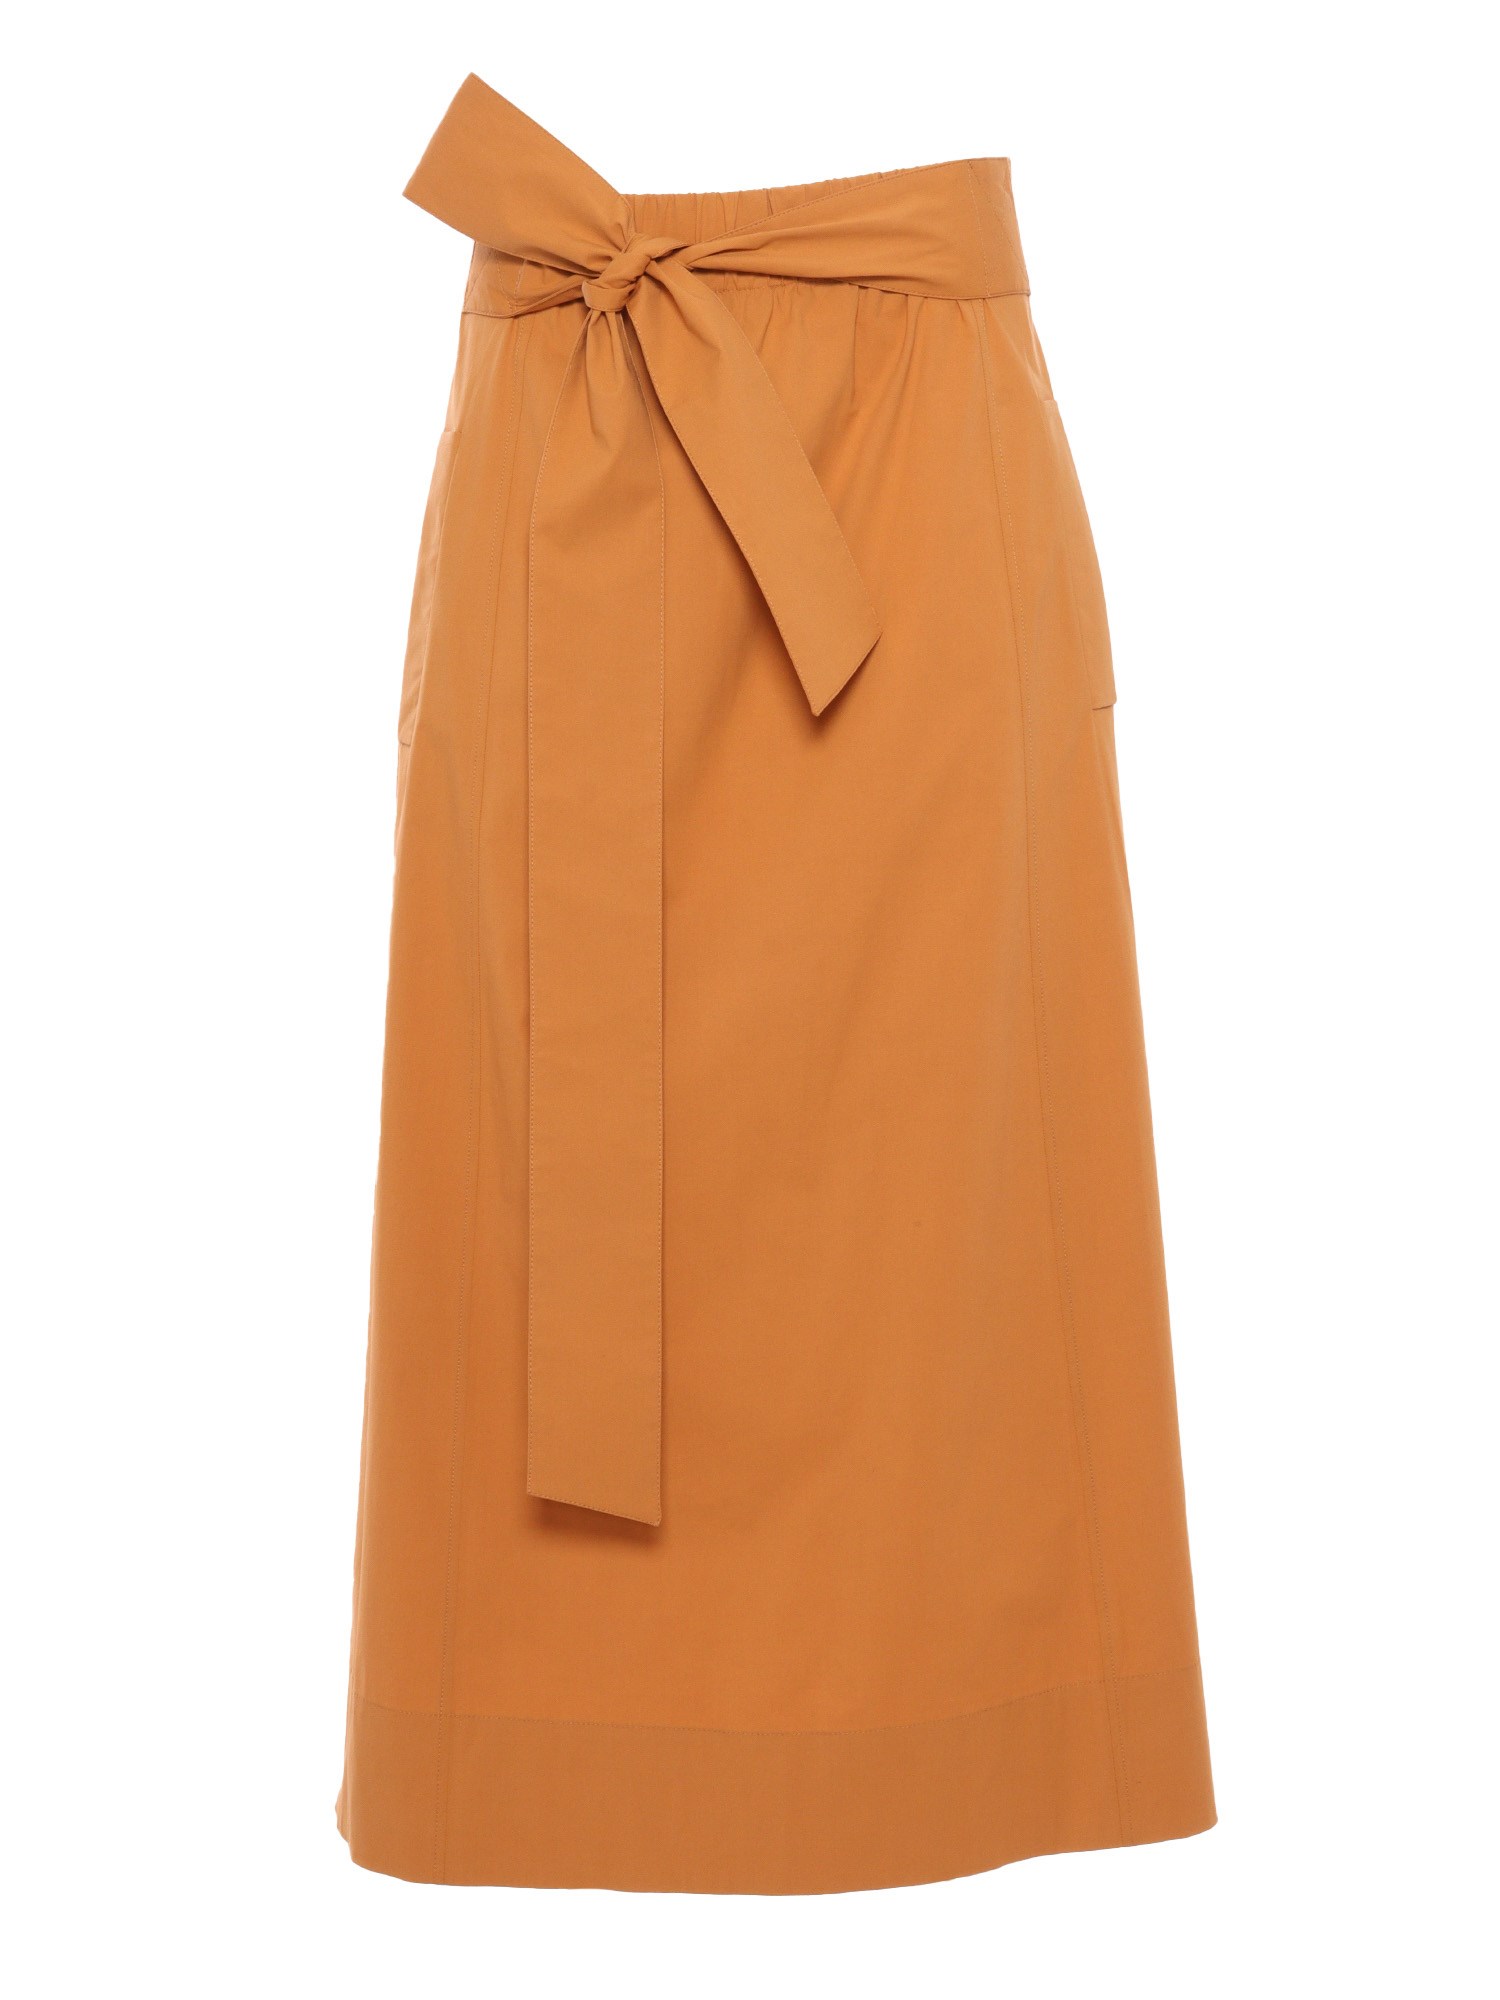 Antonelli Firenze Orange Skirt With Bow